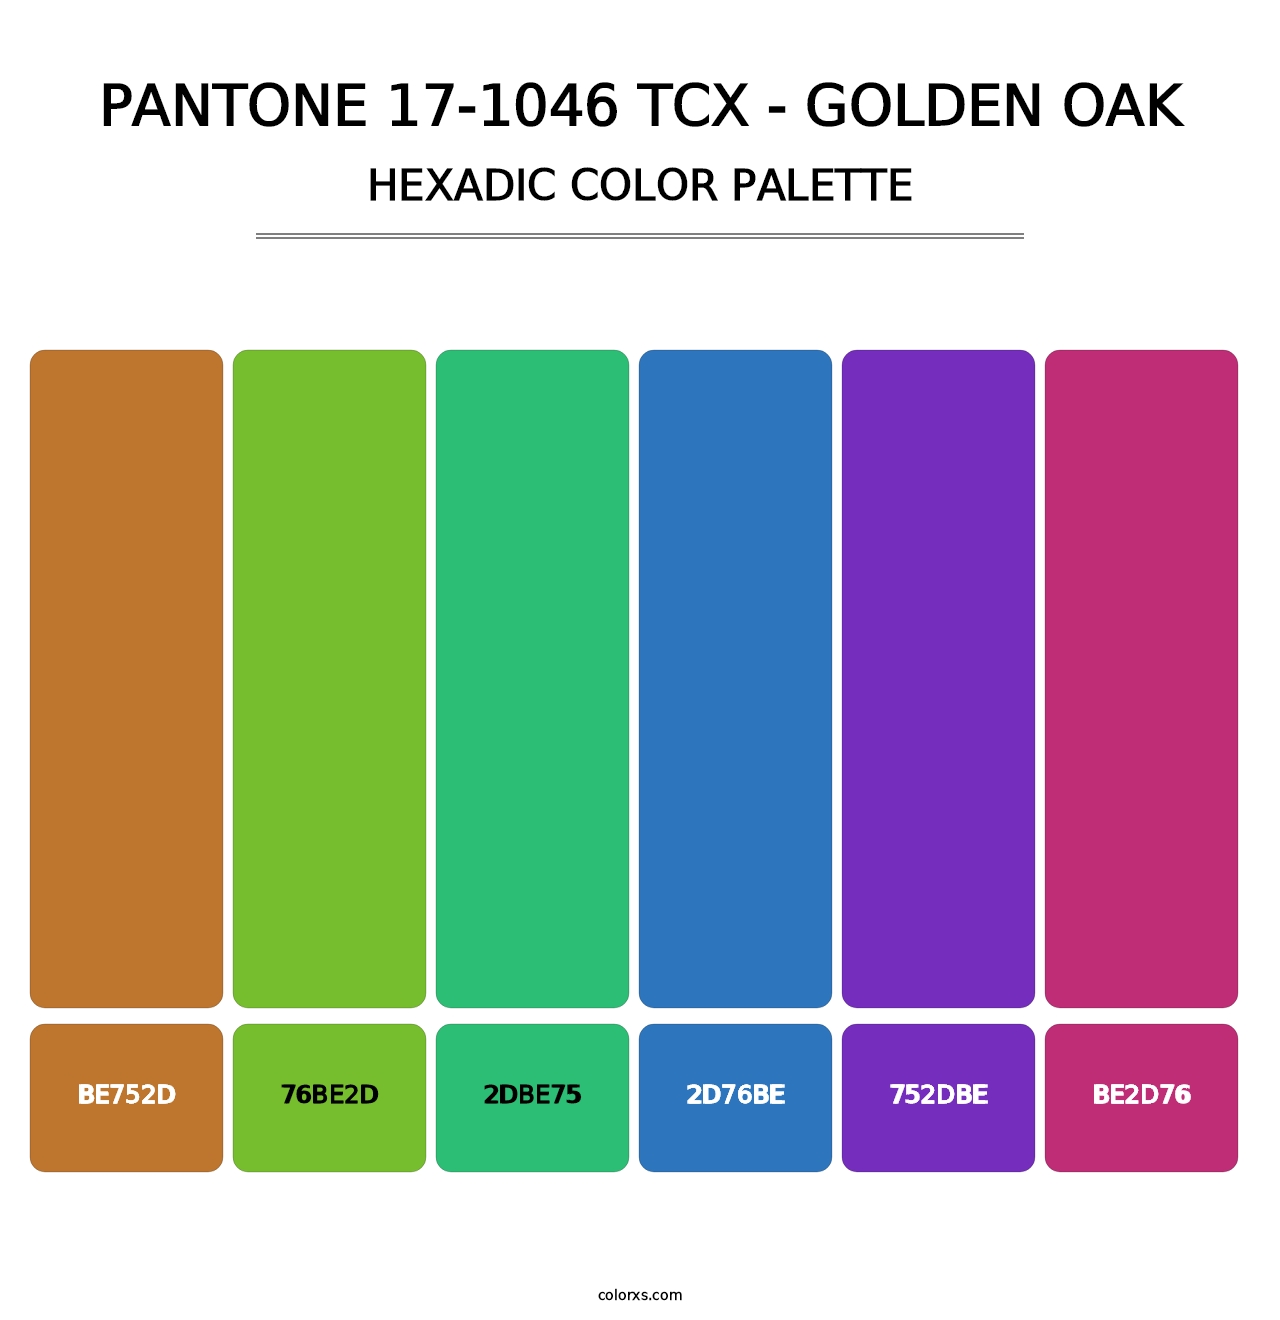 PANTONE 17-1046 TCX - Golden Oak - Hexadic Color Palette